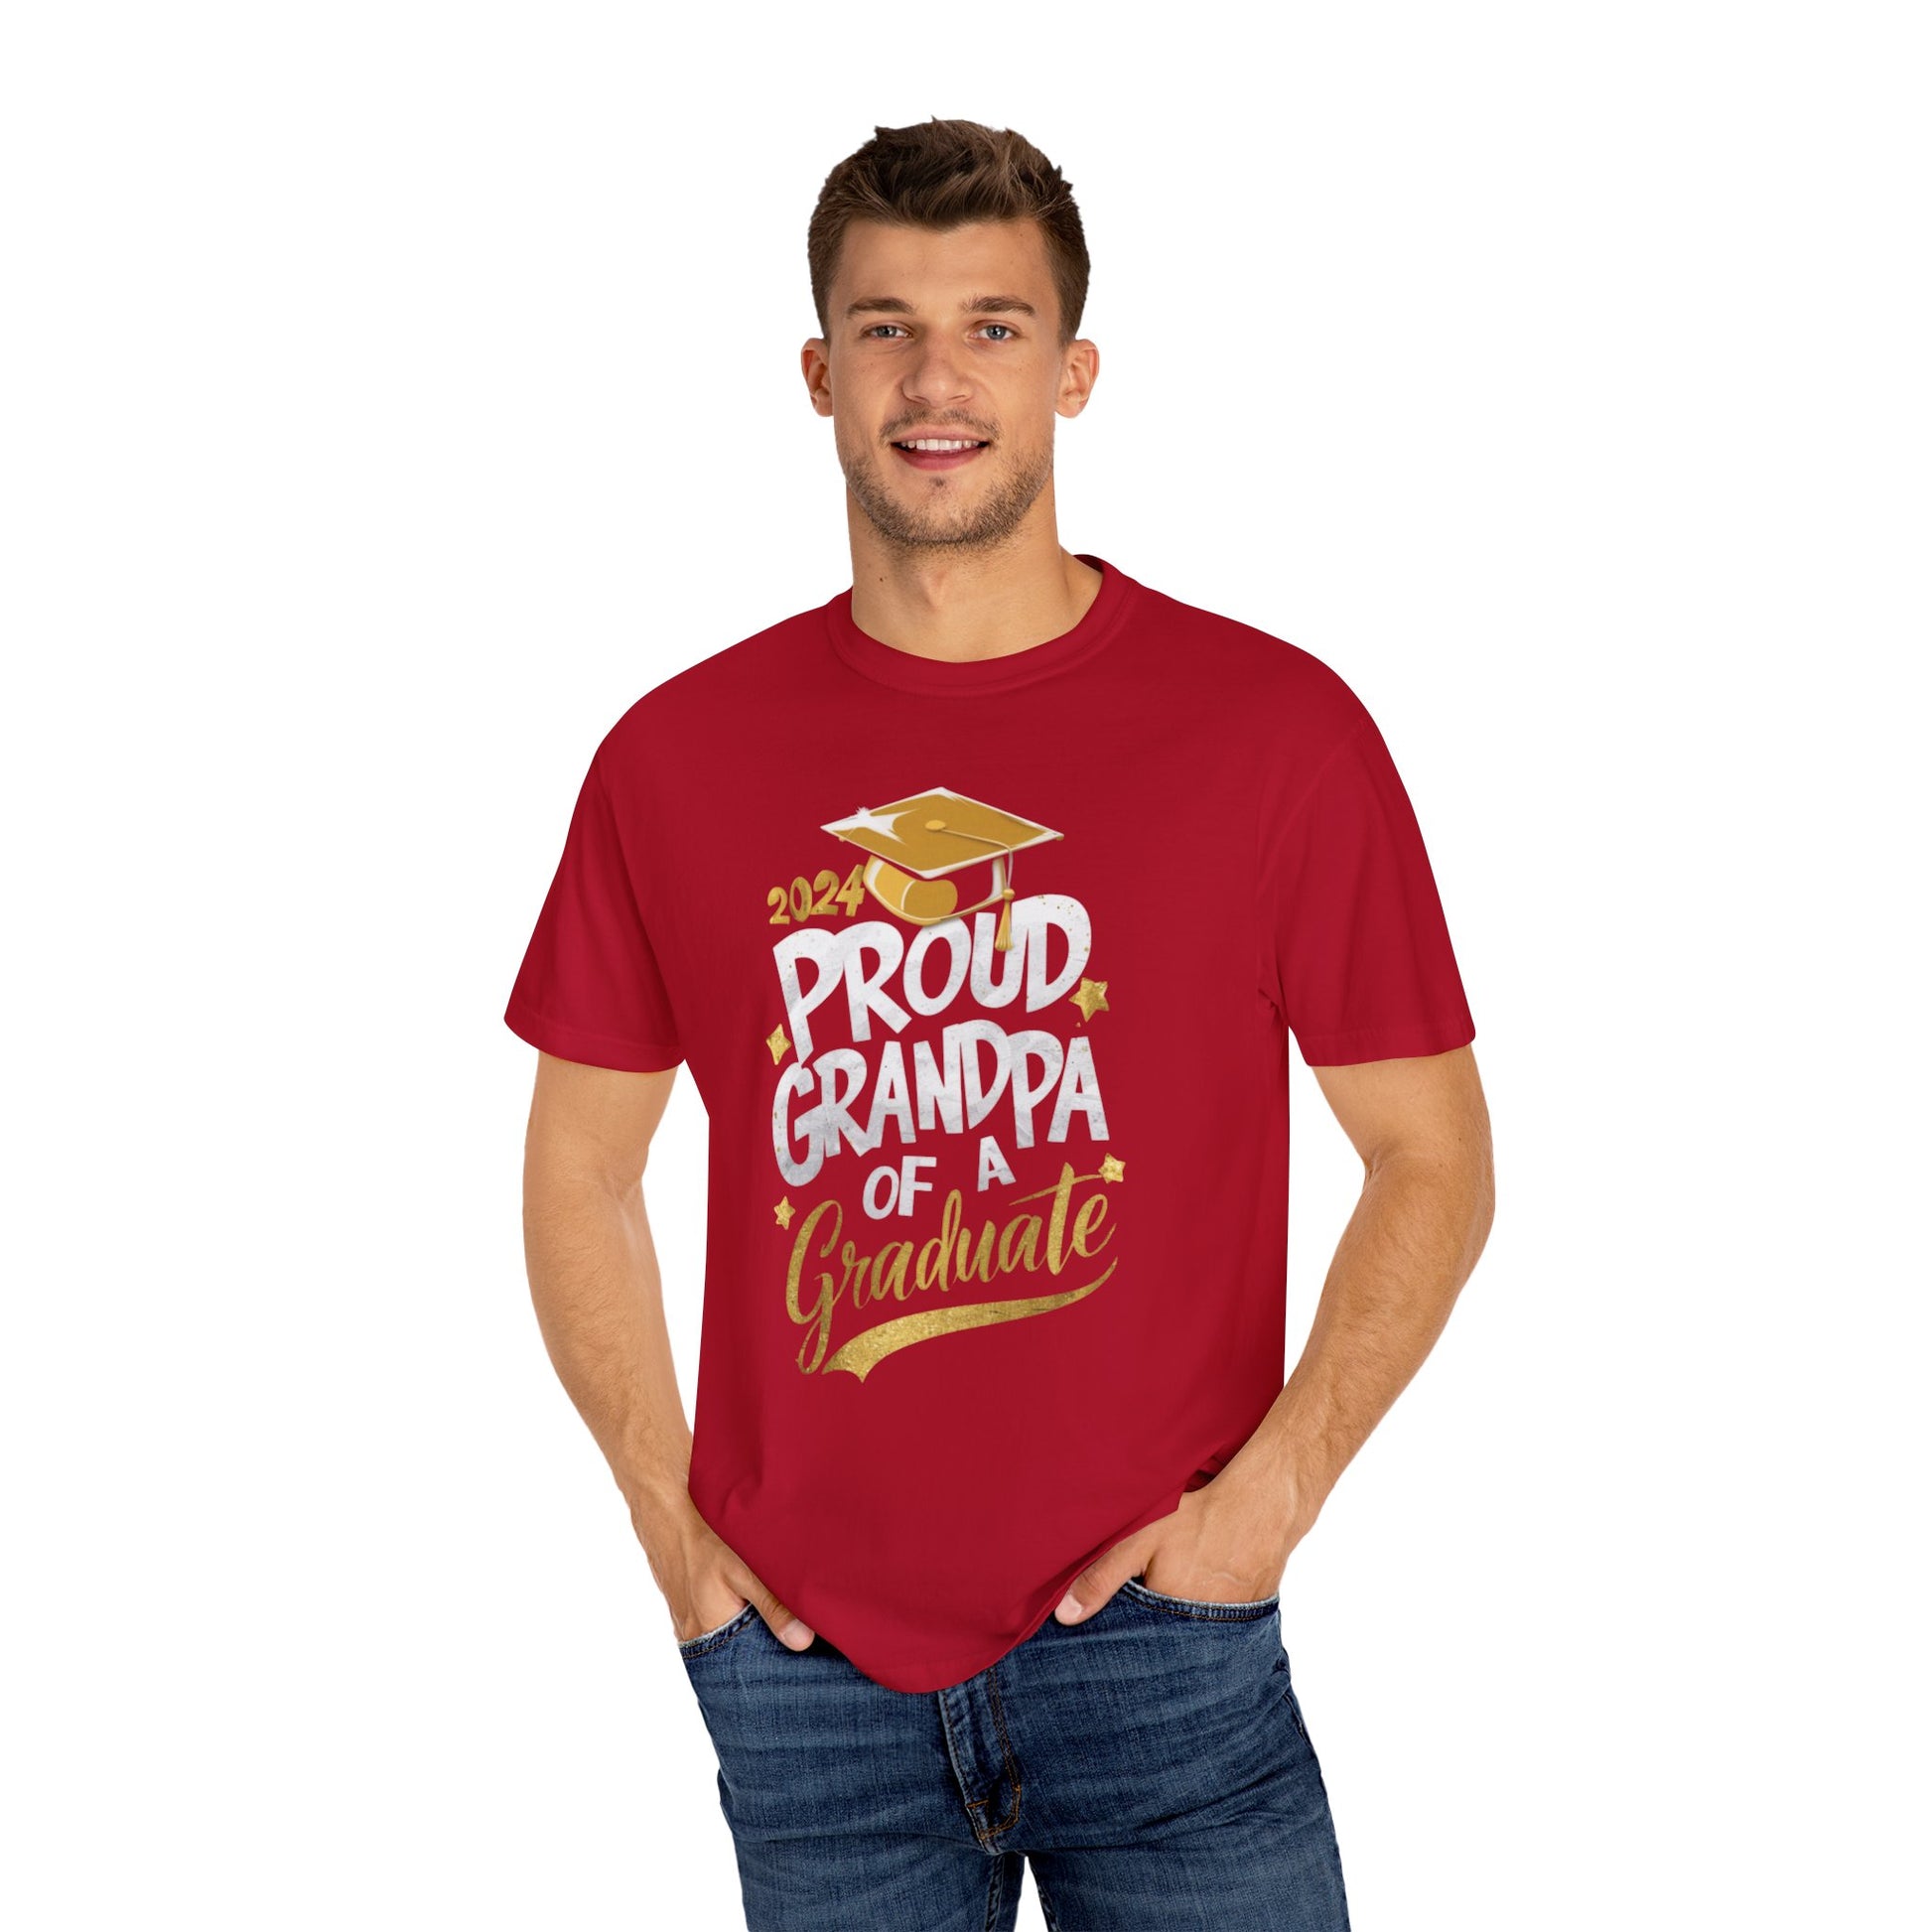 Proud Grandpa of a 2024 Graduate Unisex Garment-dyed T-shirt Cotton Funny Humorous Graphic Soft Premium Unisex Men Women Red T-shirt Birthday Gift-21